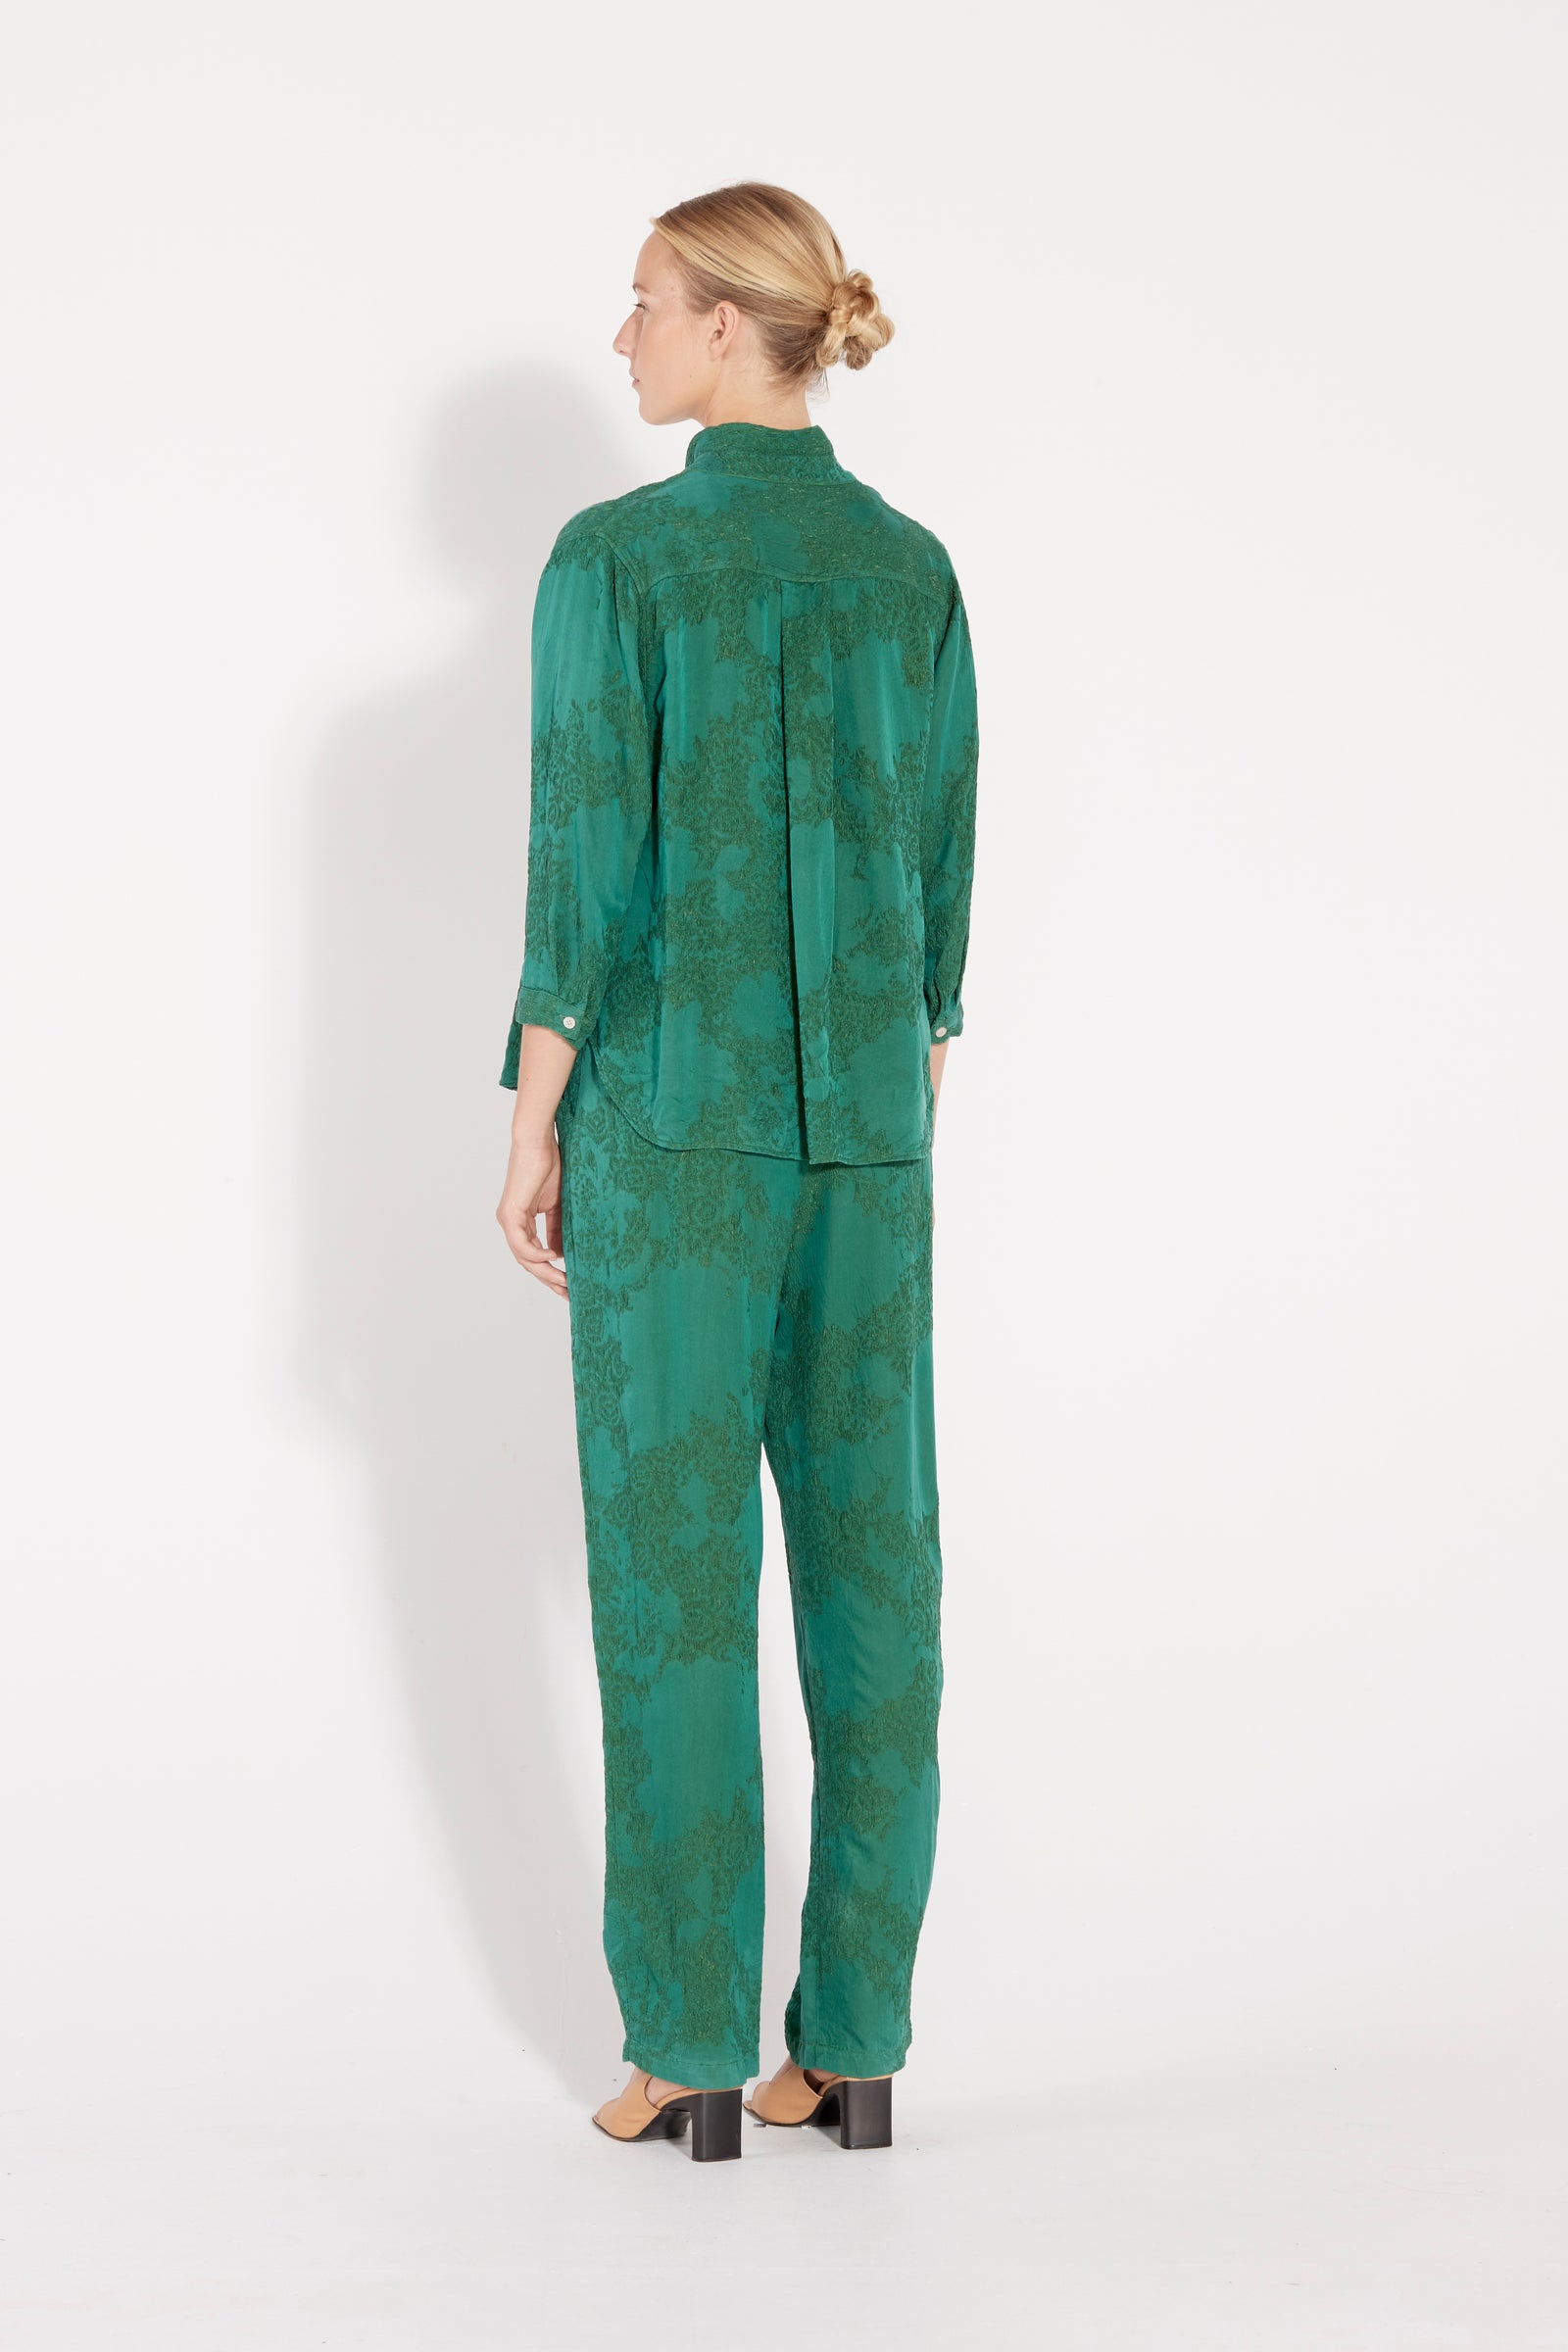 Emerald Silk Jacquard Lauren Blouse Full Back View